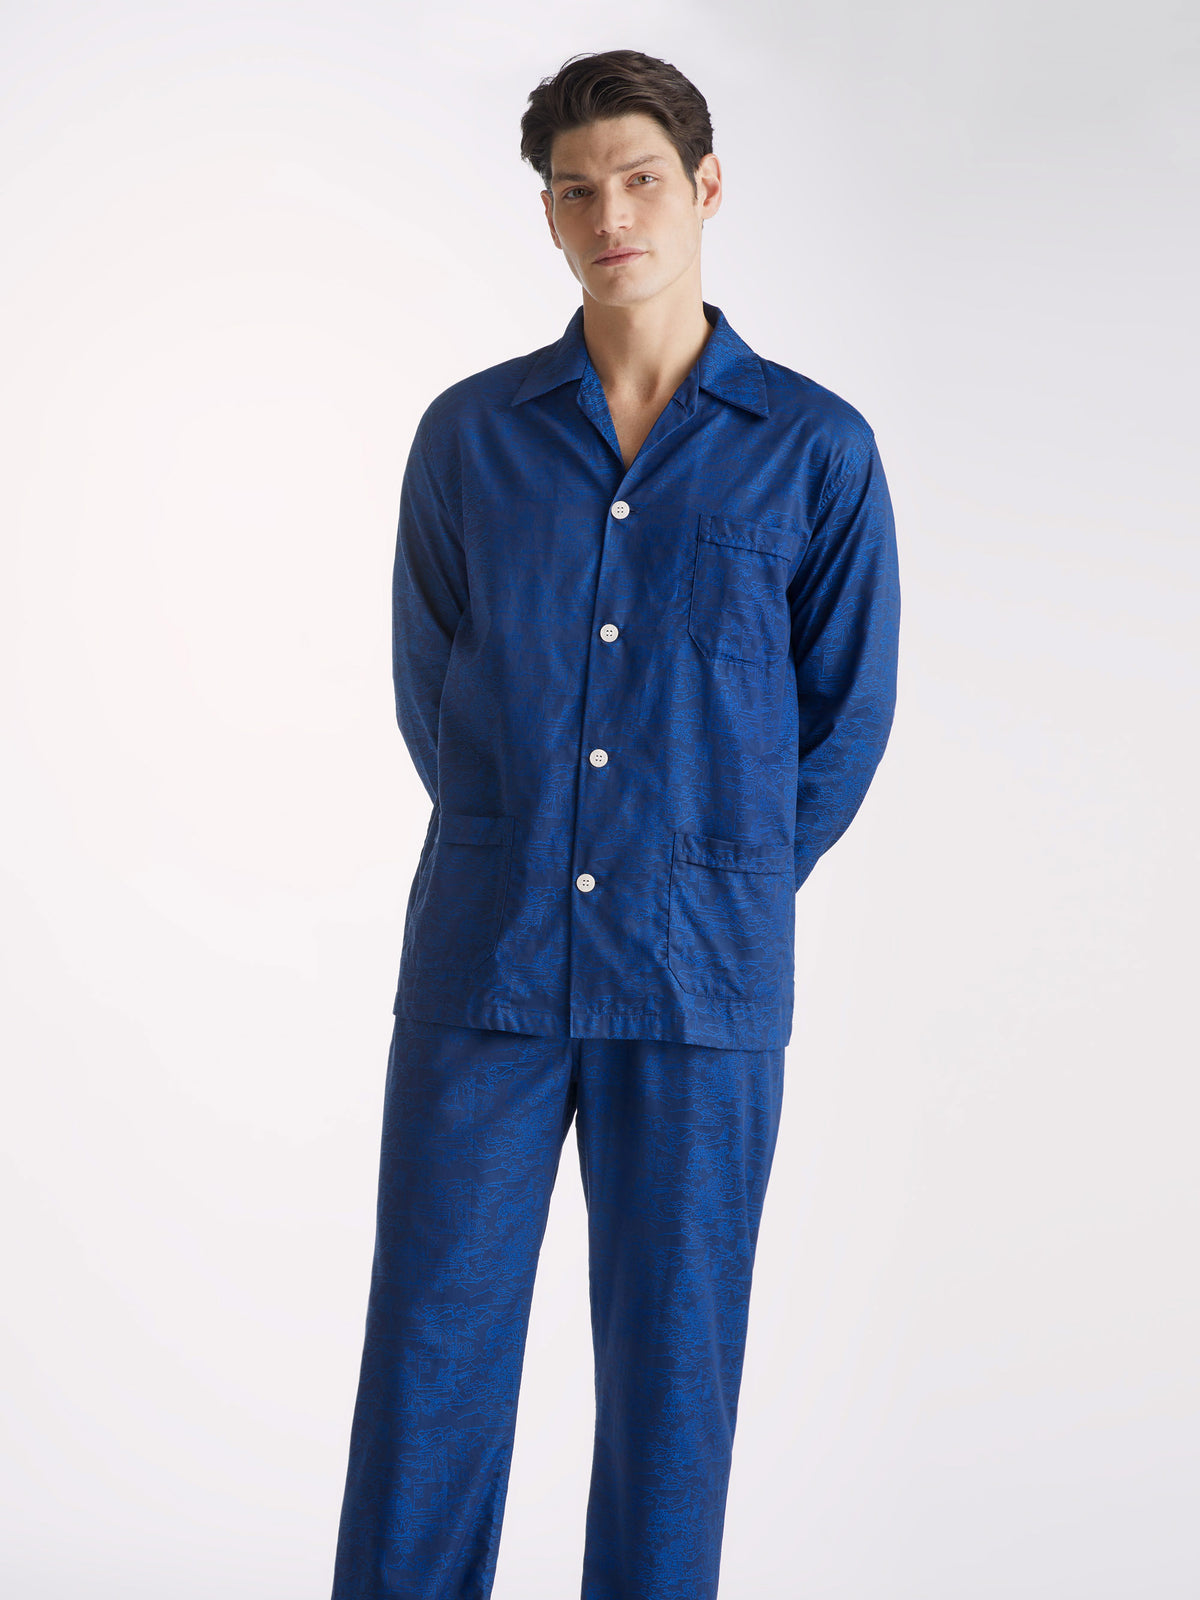 Men's Classic Fit Pyjamas Paris 25 Cotton Jacquard Navy